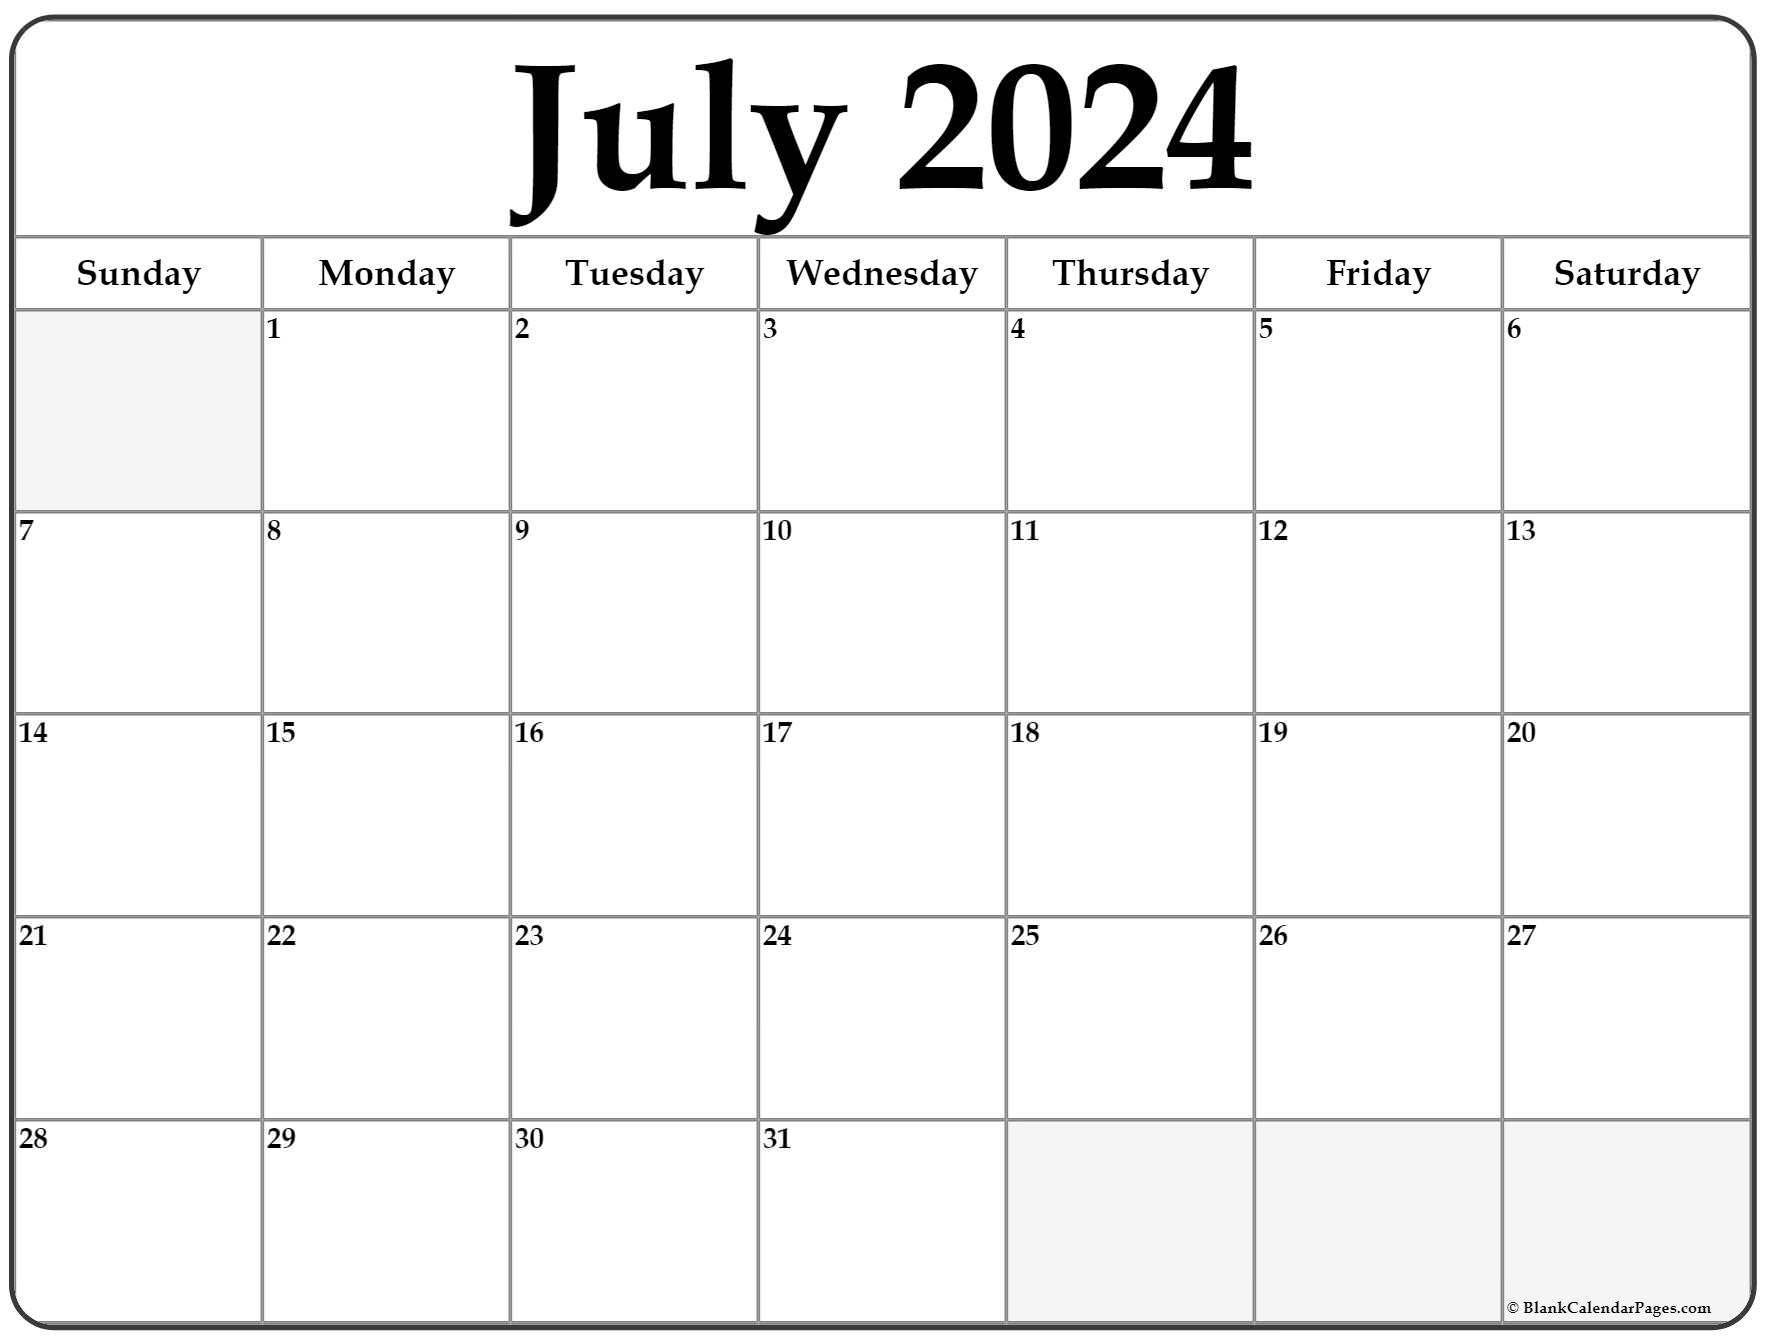 July 2024 Calendar | Free Printable Calendar for Summer 2024 Calendar Printable Free